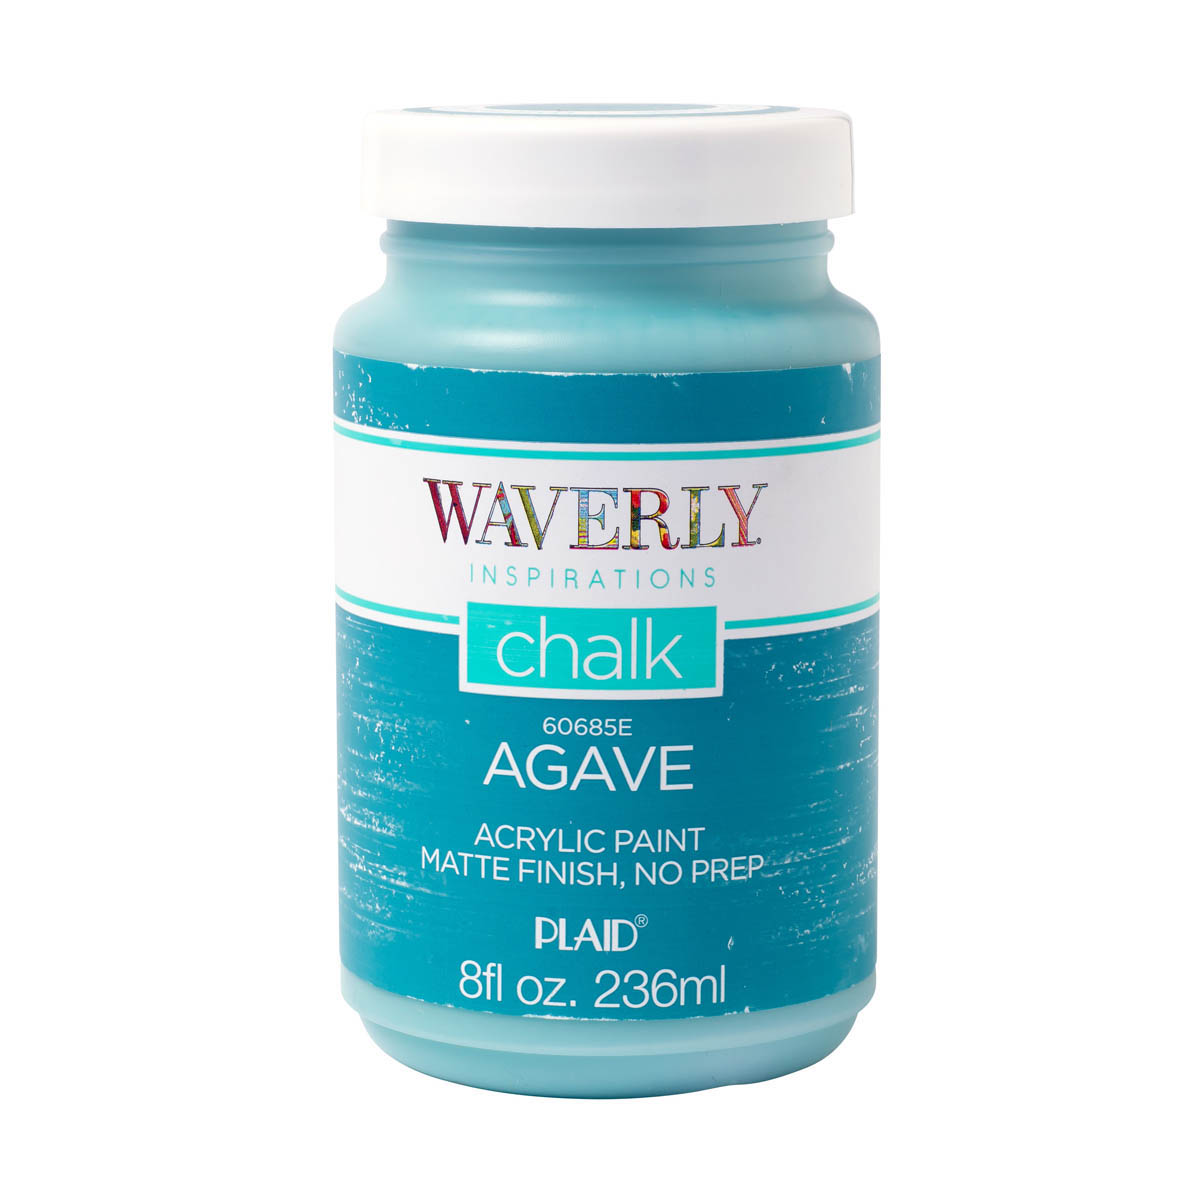 Waverly ® Inspirations Chalk Acrylic Paint - Agave, 8 oz. - 60685E